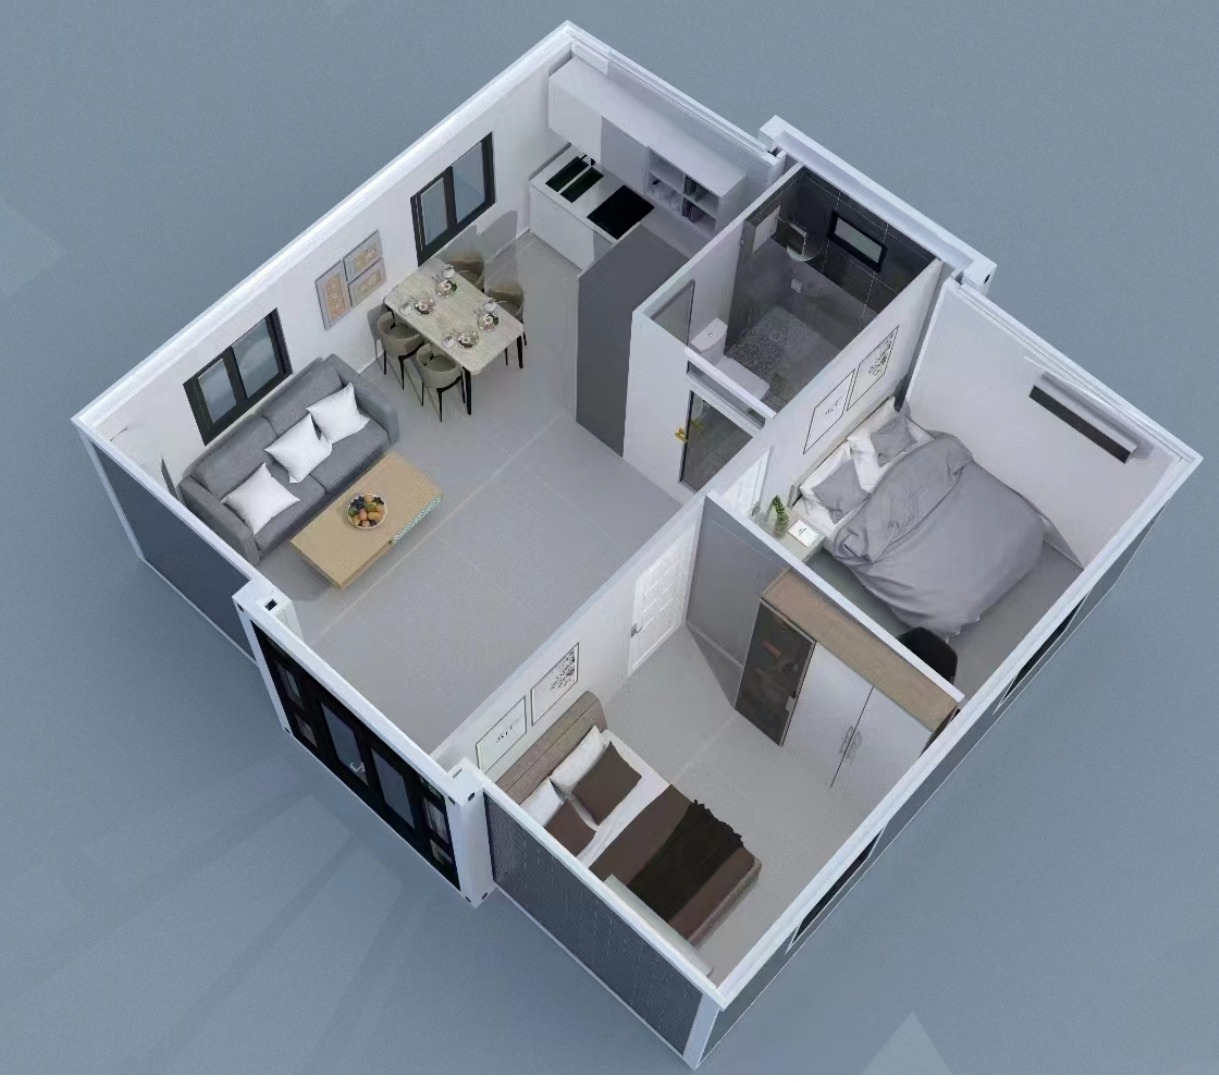 Grande expandable mobile home design